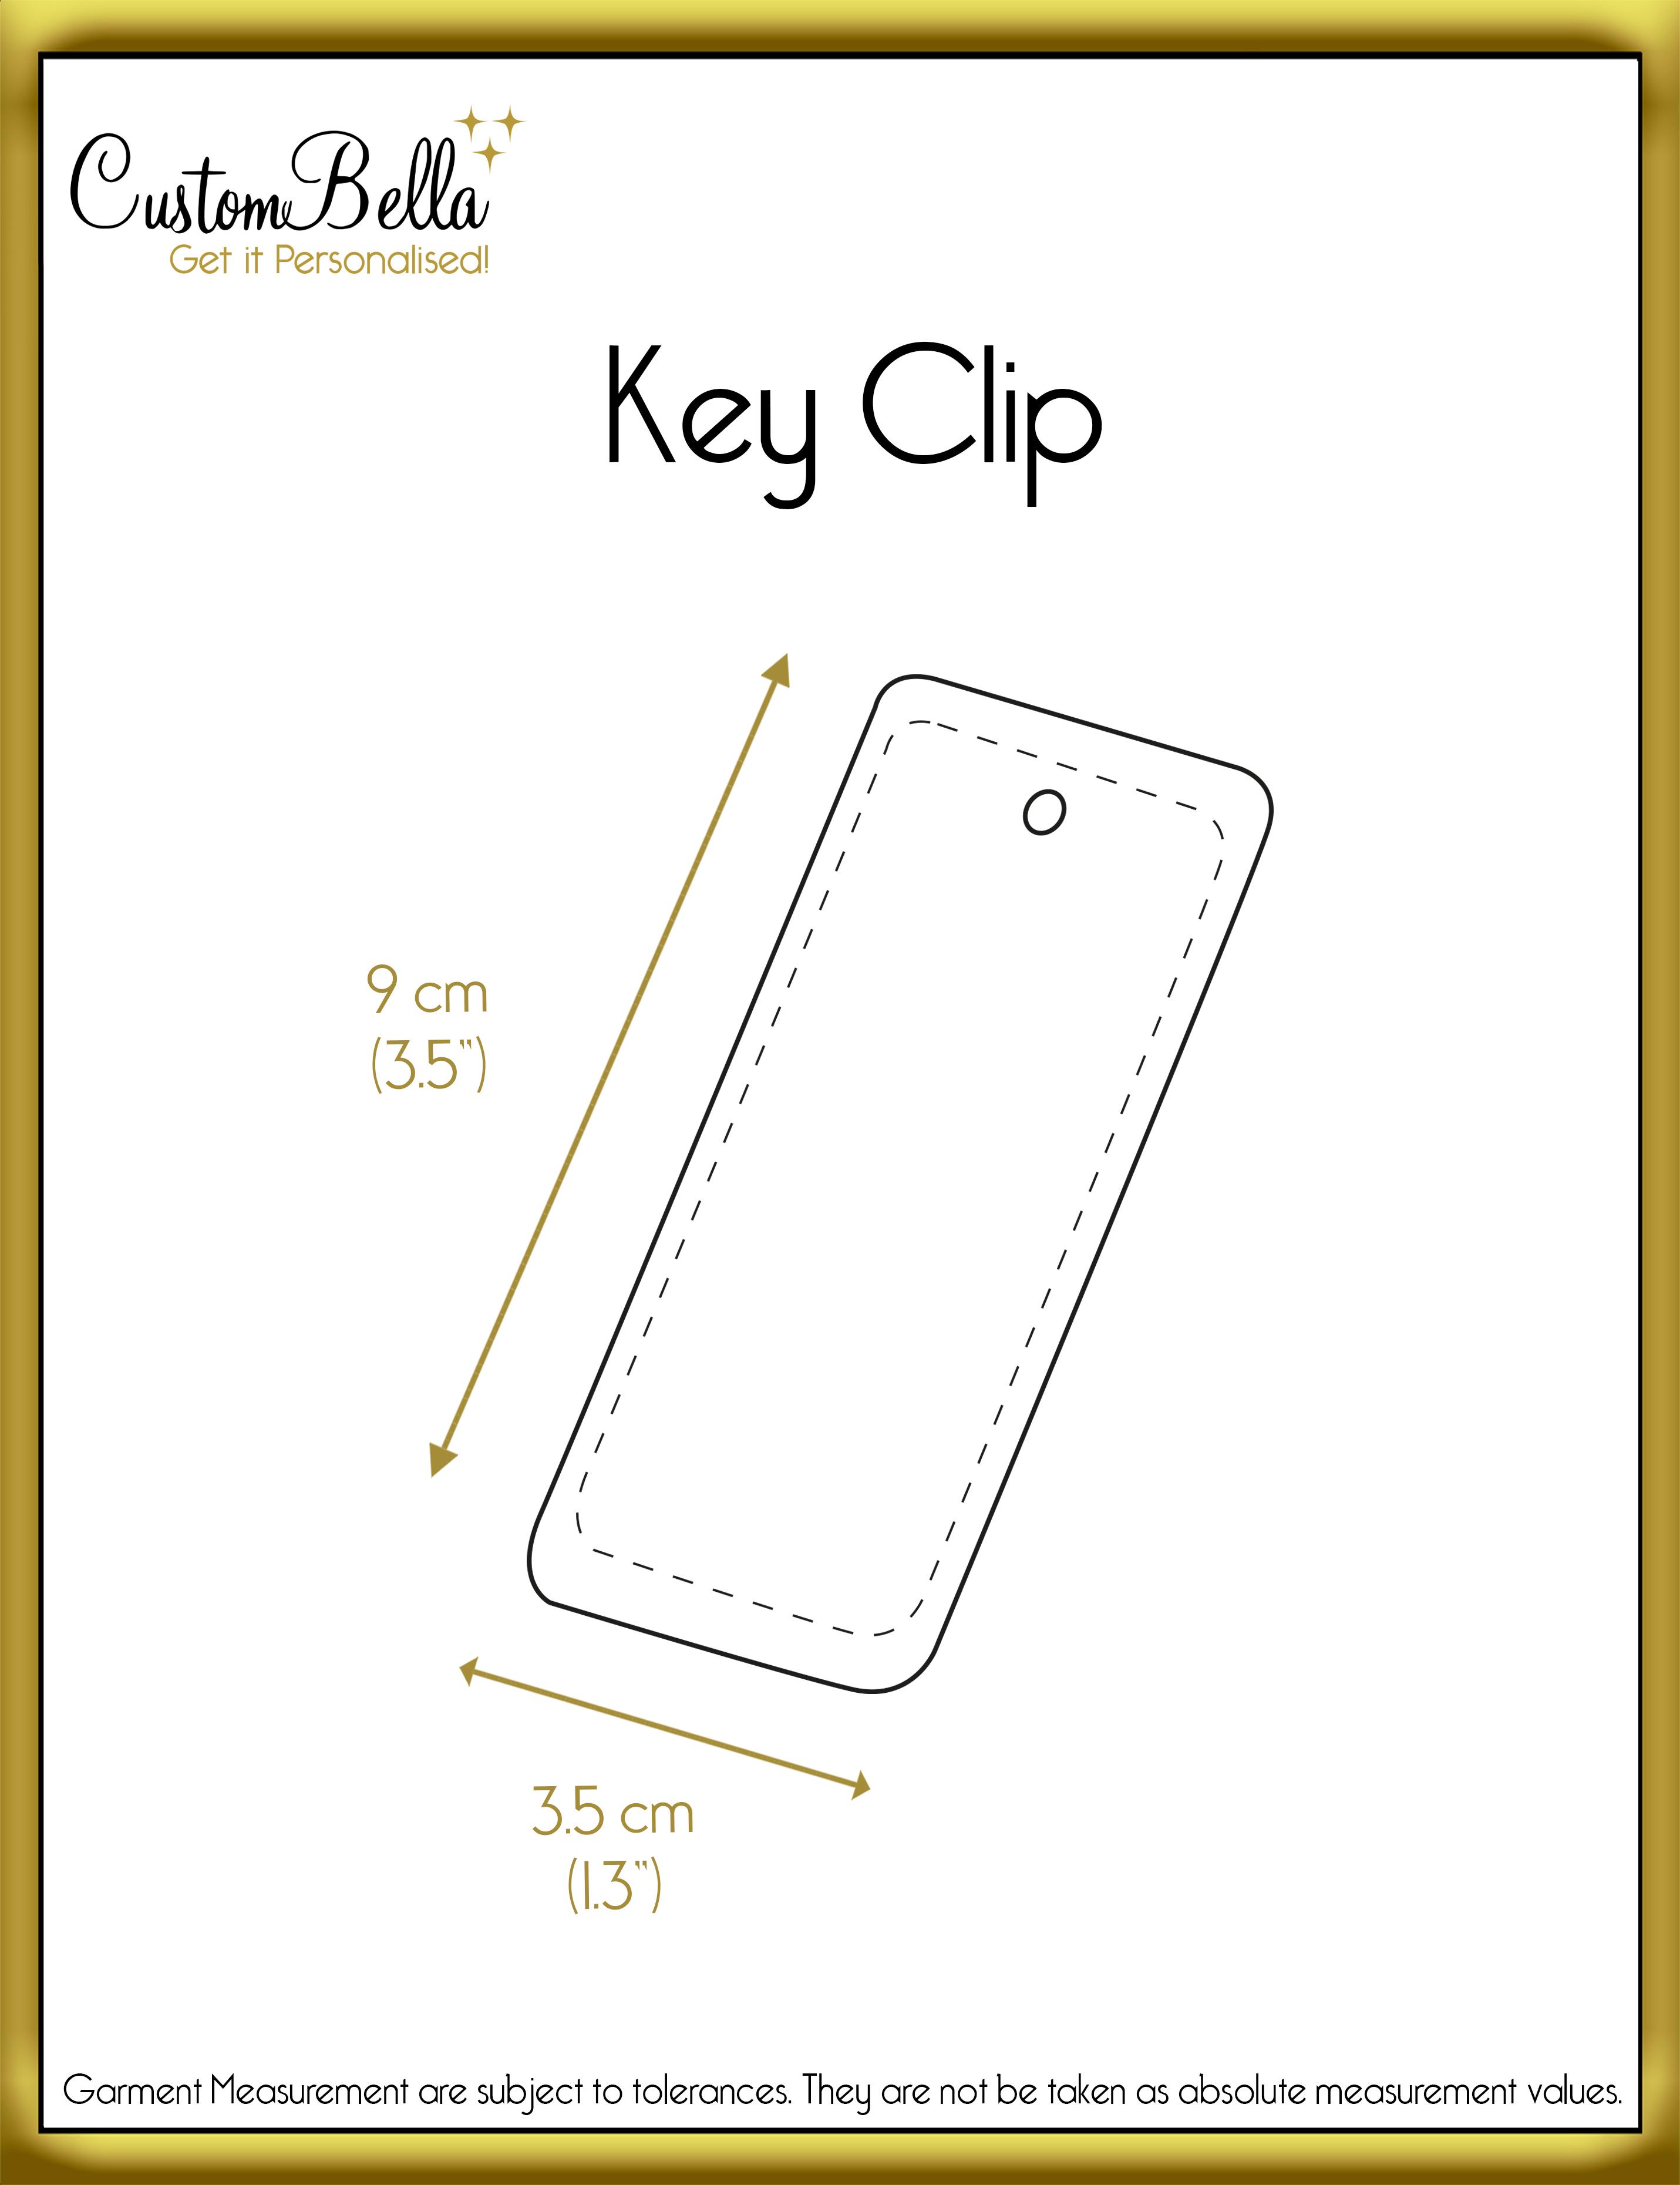 Personalised Printed Key Clip dimensions